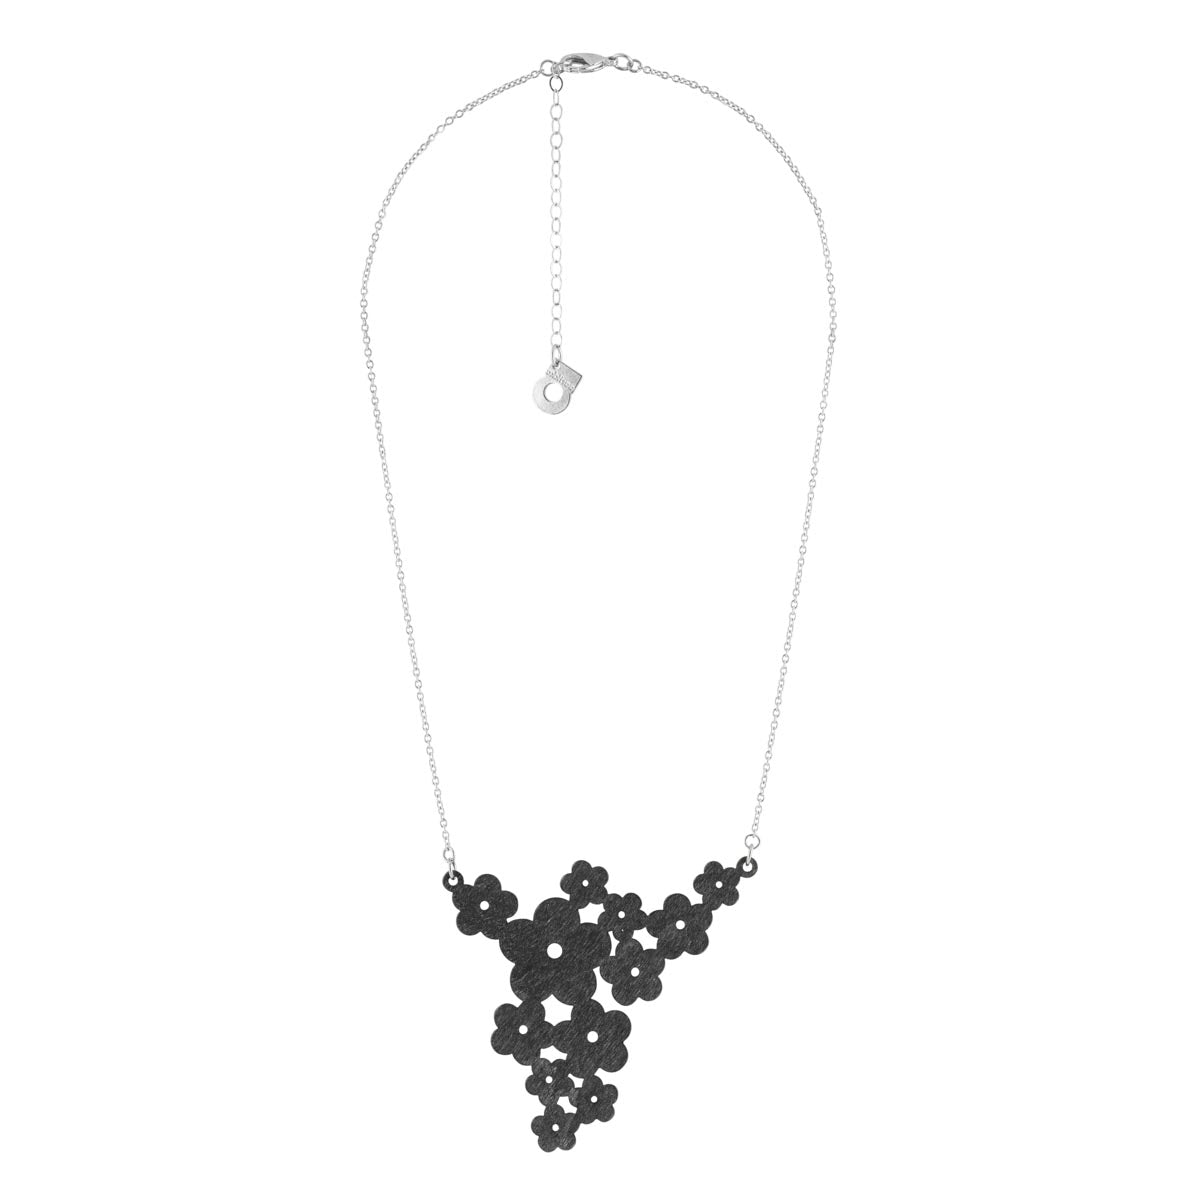 Kukkaset necklace, black